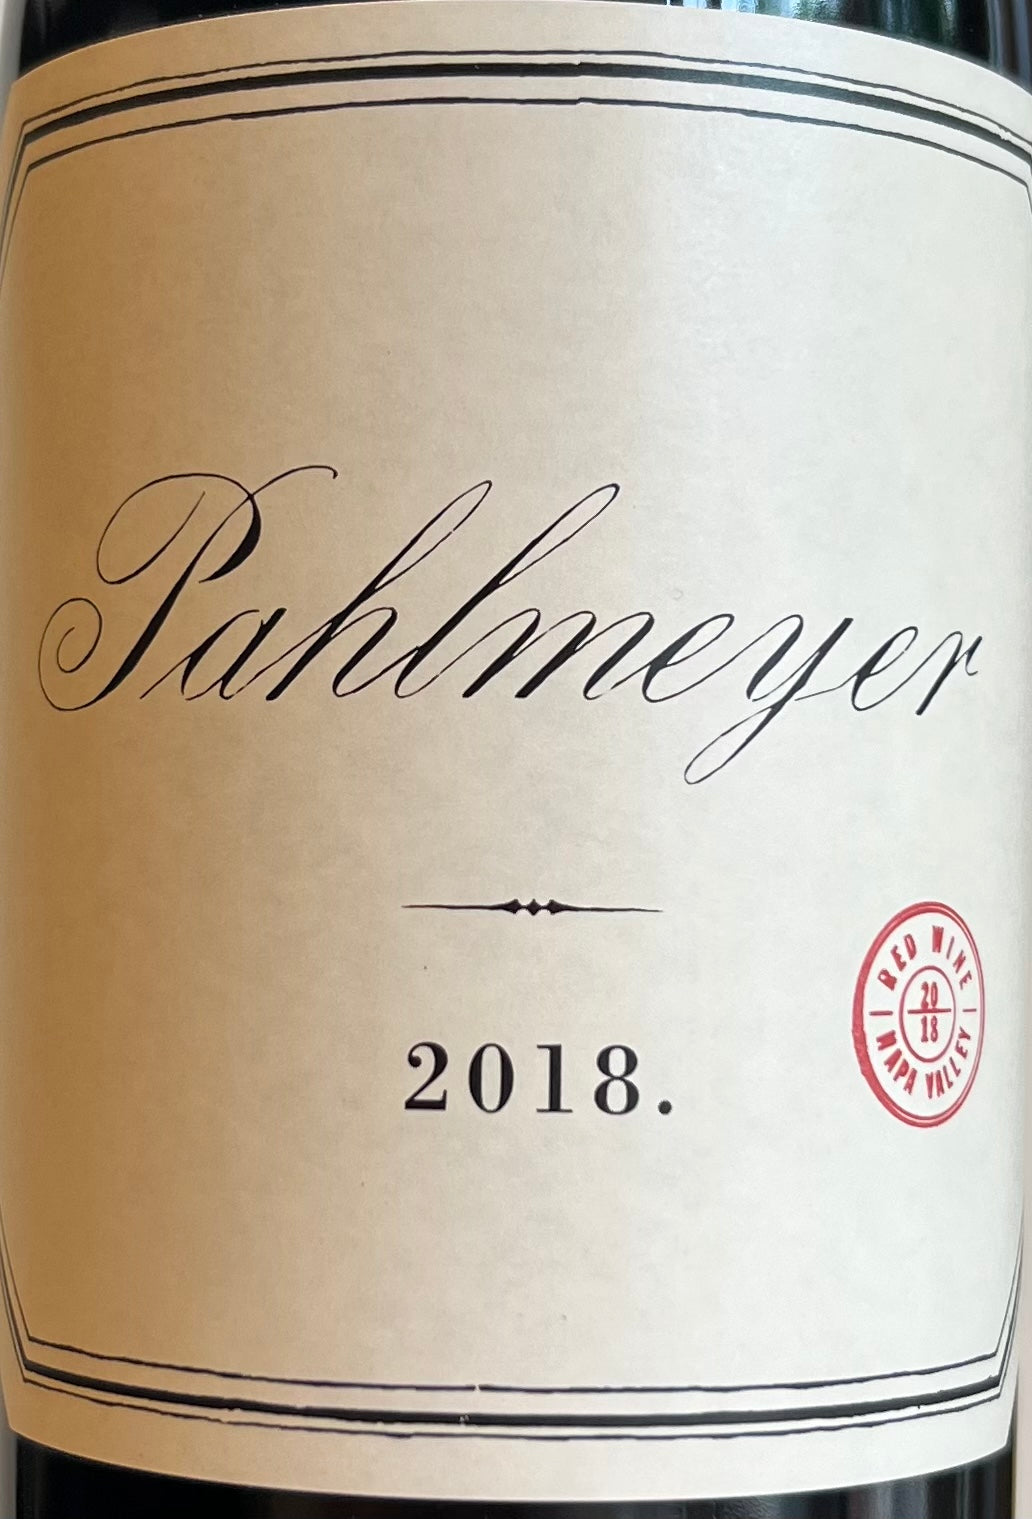 Pahlmeyer - Prioprietary Red - 2018